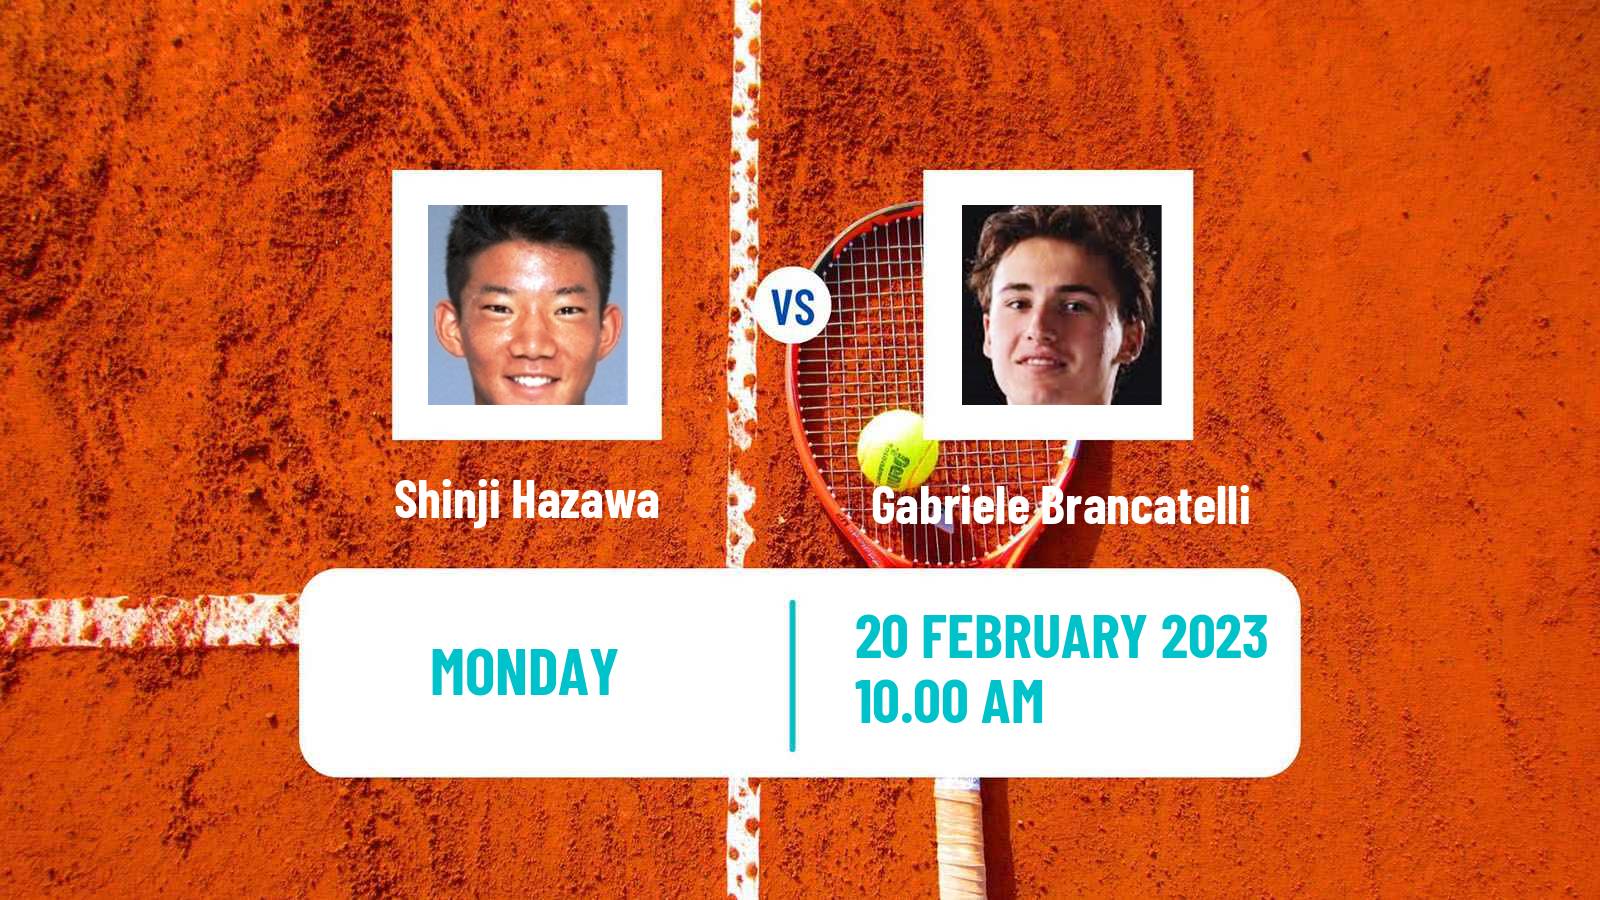 Tennis ATP Challenger Shinji Hazawa - Gabriele Brancatelli